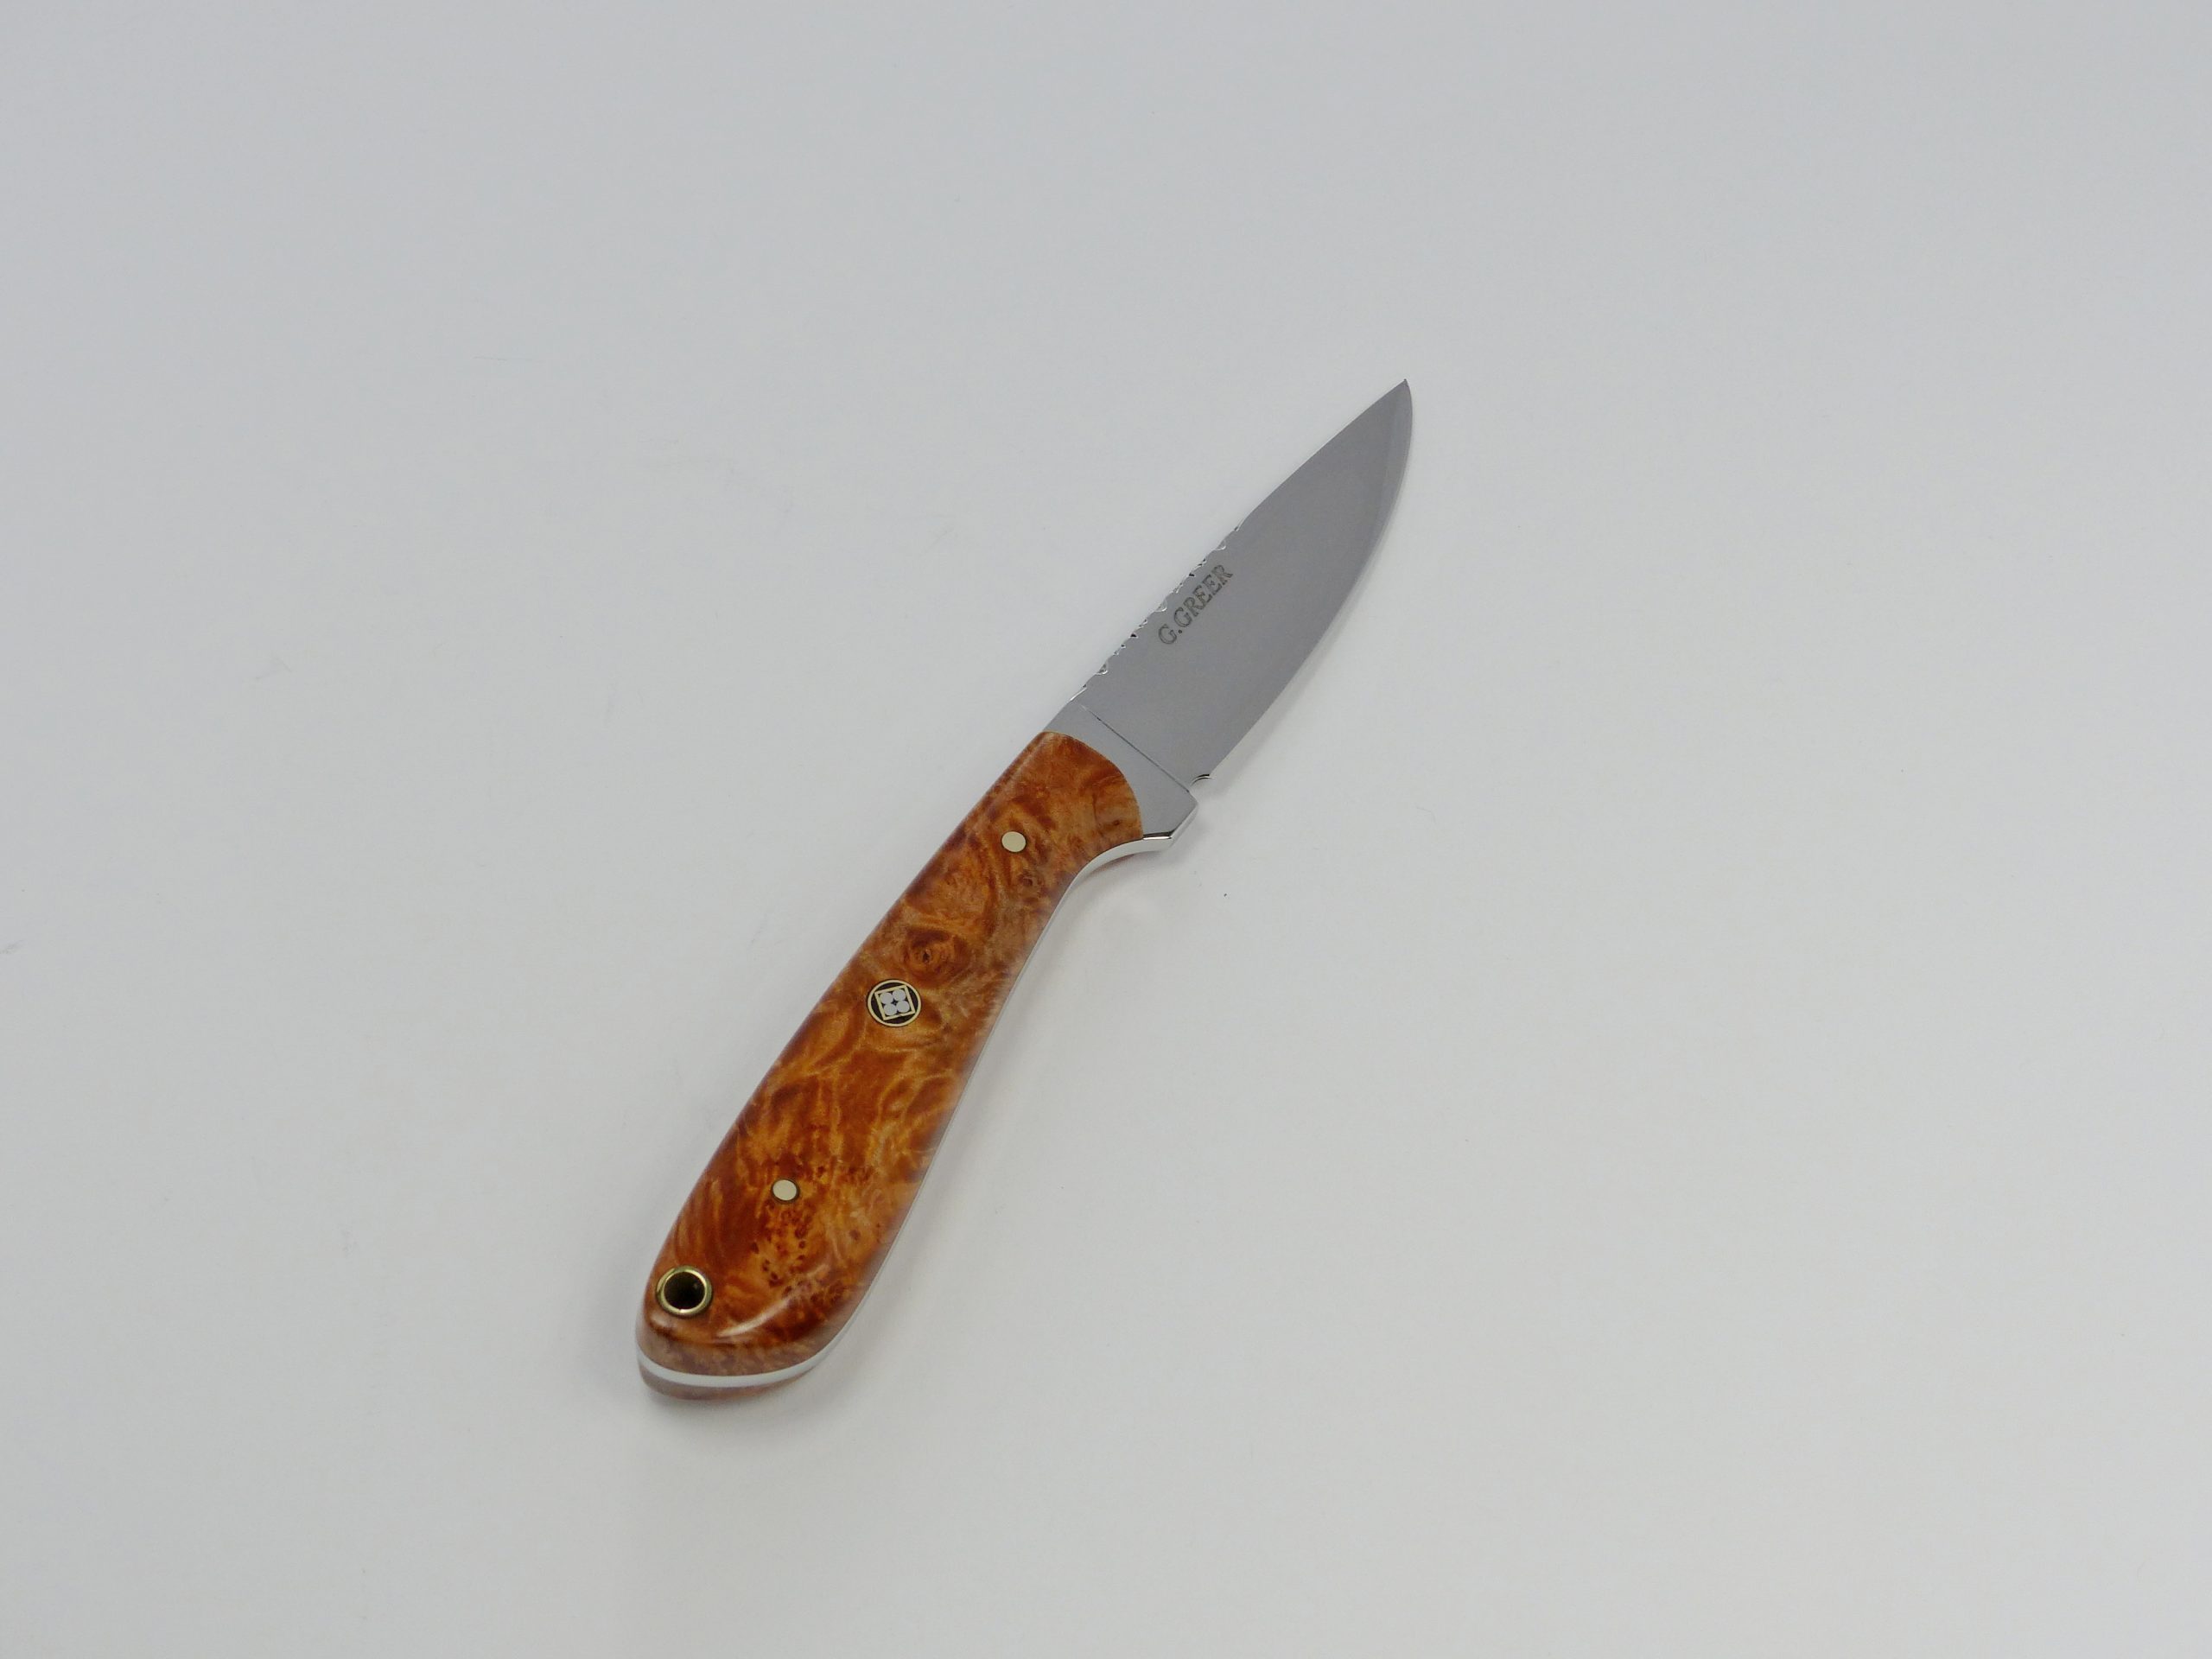 Drop point figured maple EDC knife